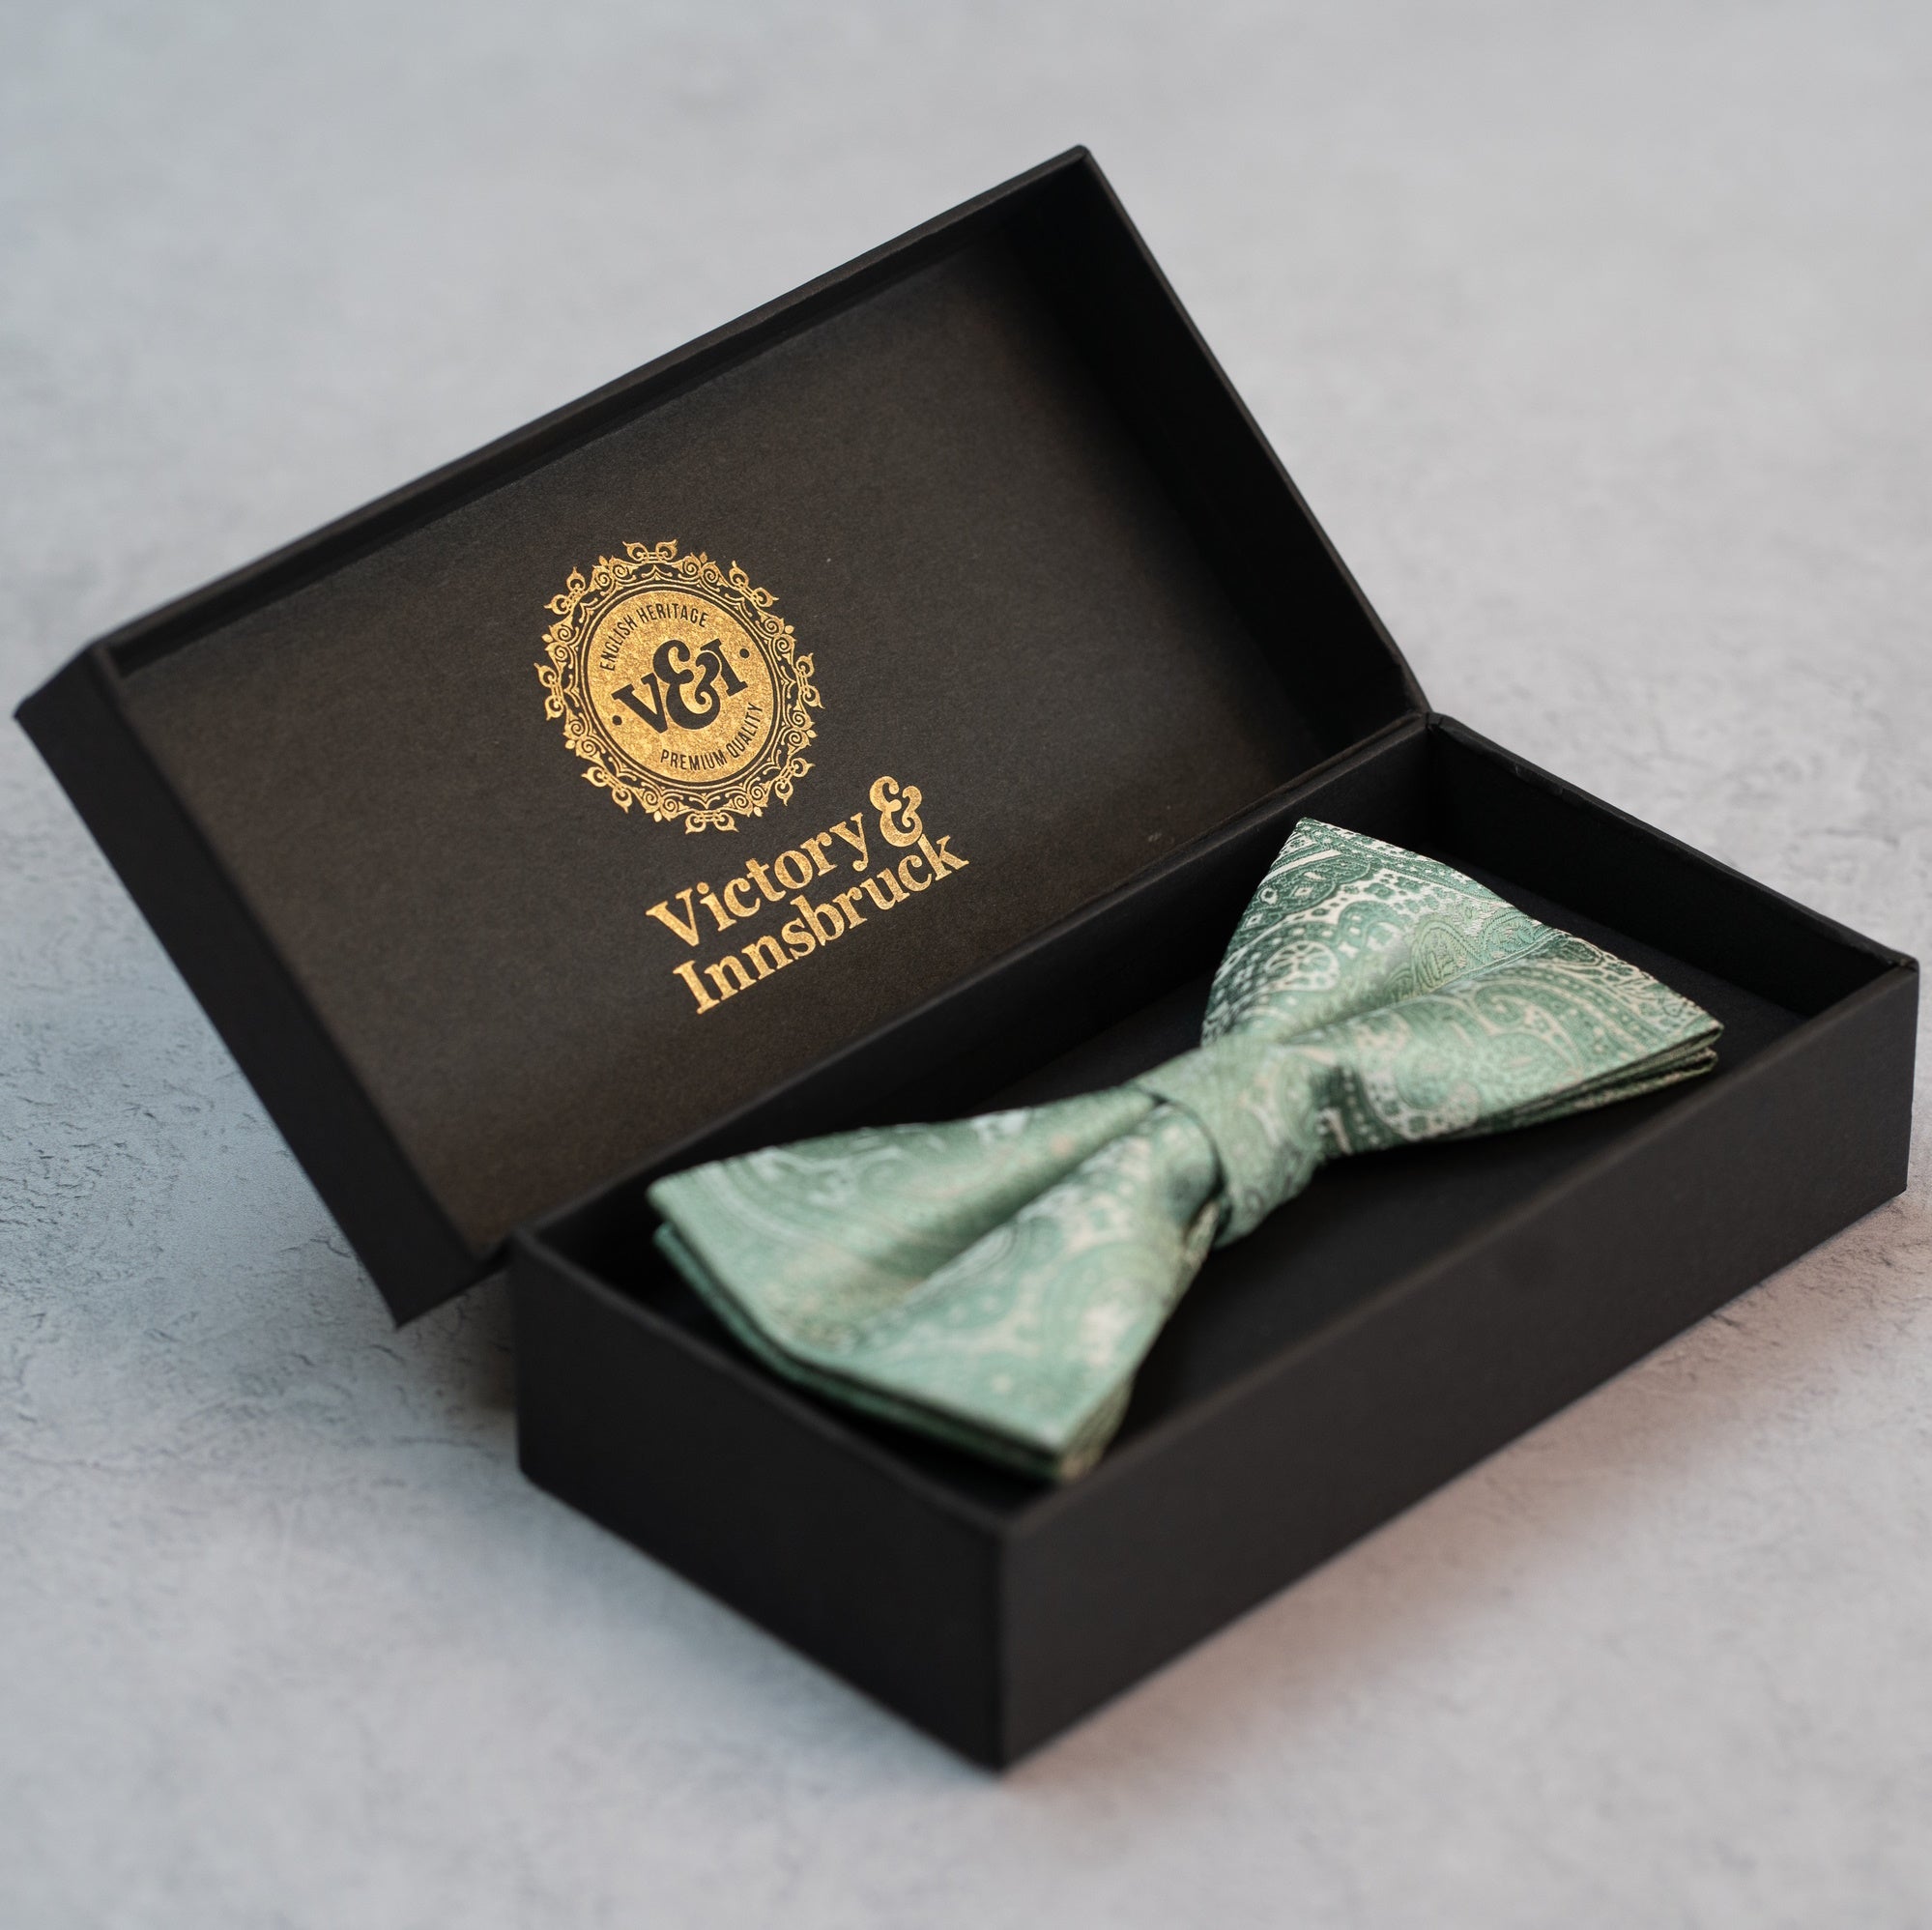 Sage Green Paisley Tie Gift Set